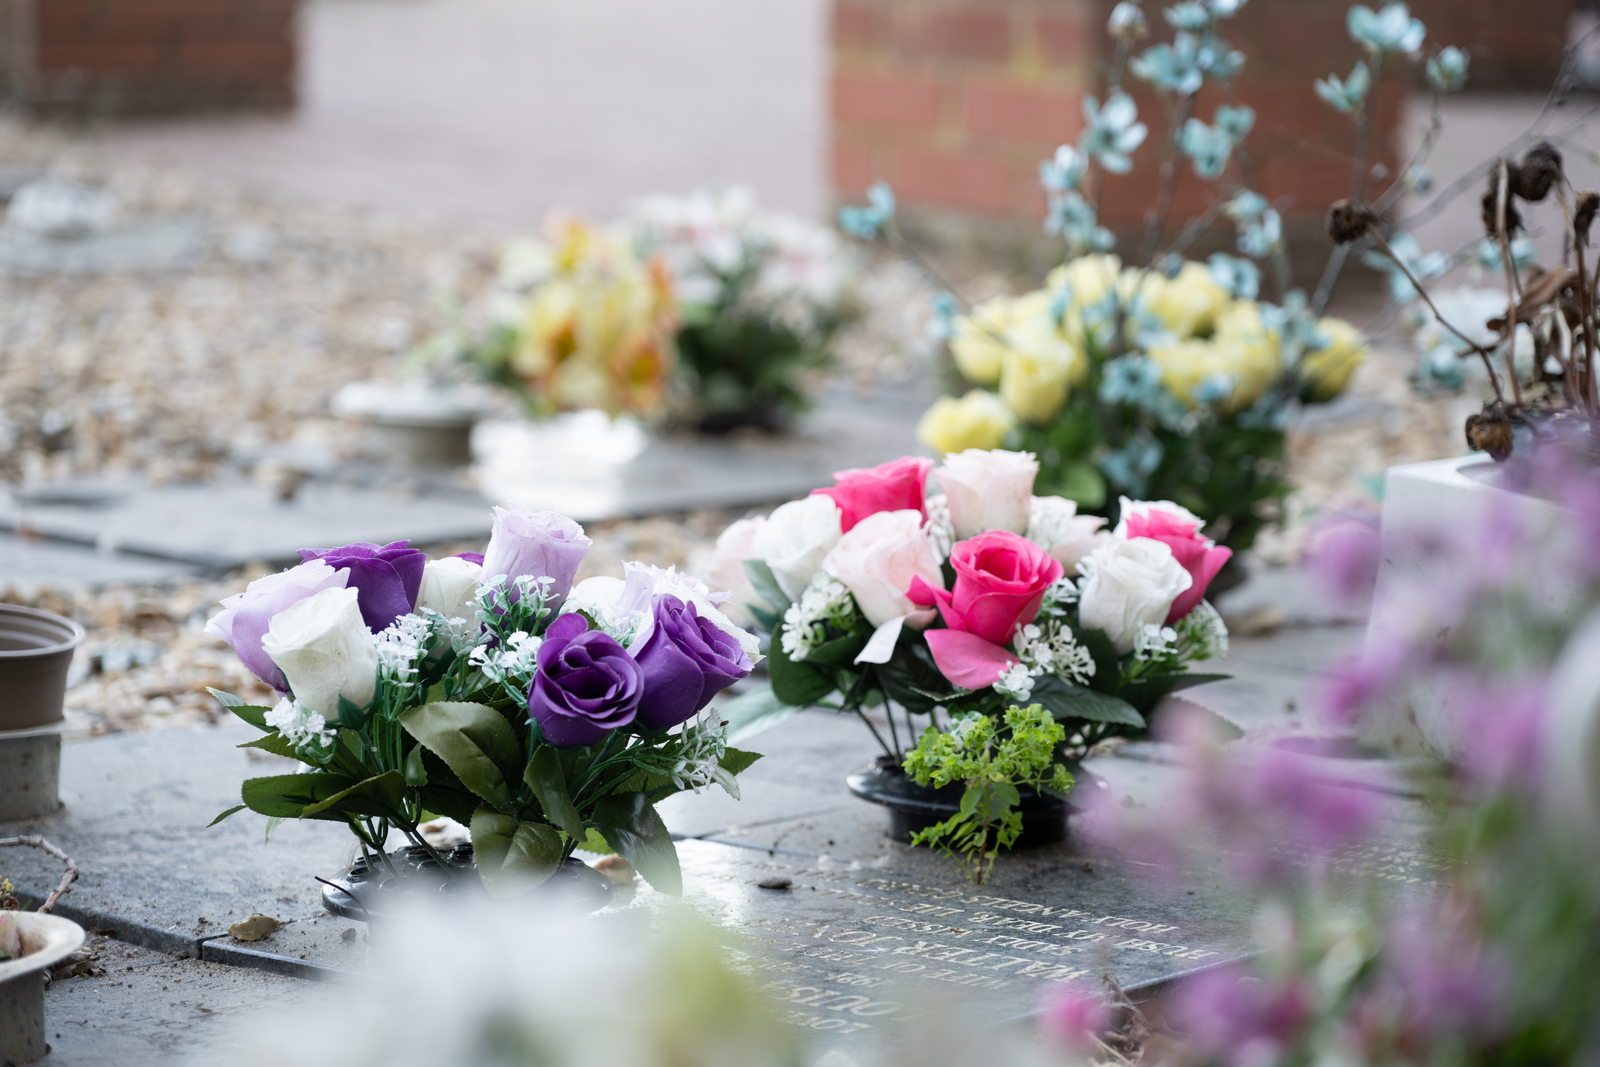 Colourful memorial flower bouquets